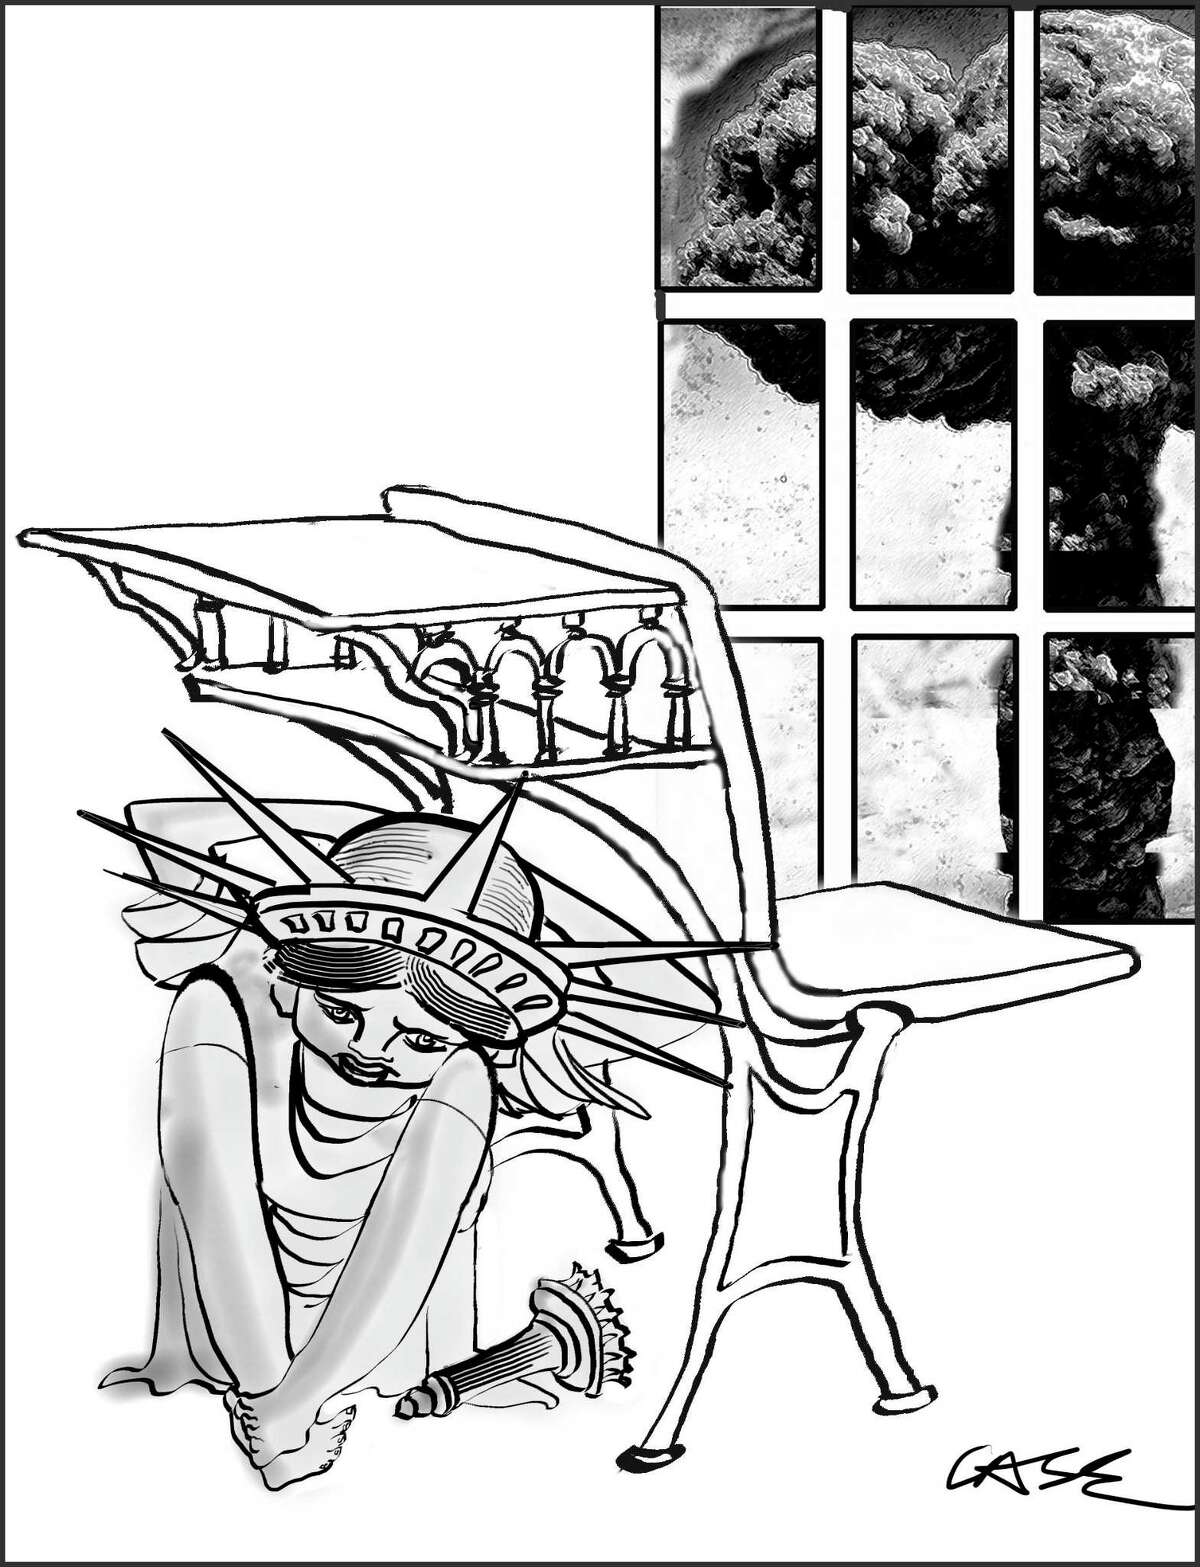 Get Under York Desk, editorial cartoon by New Canaan's M.A. Case.